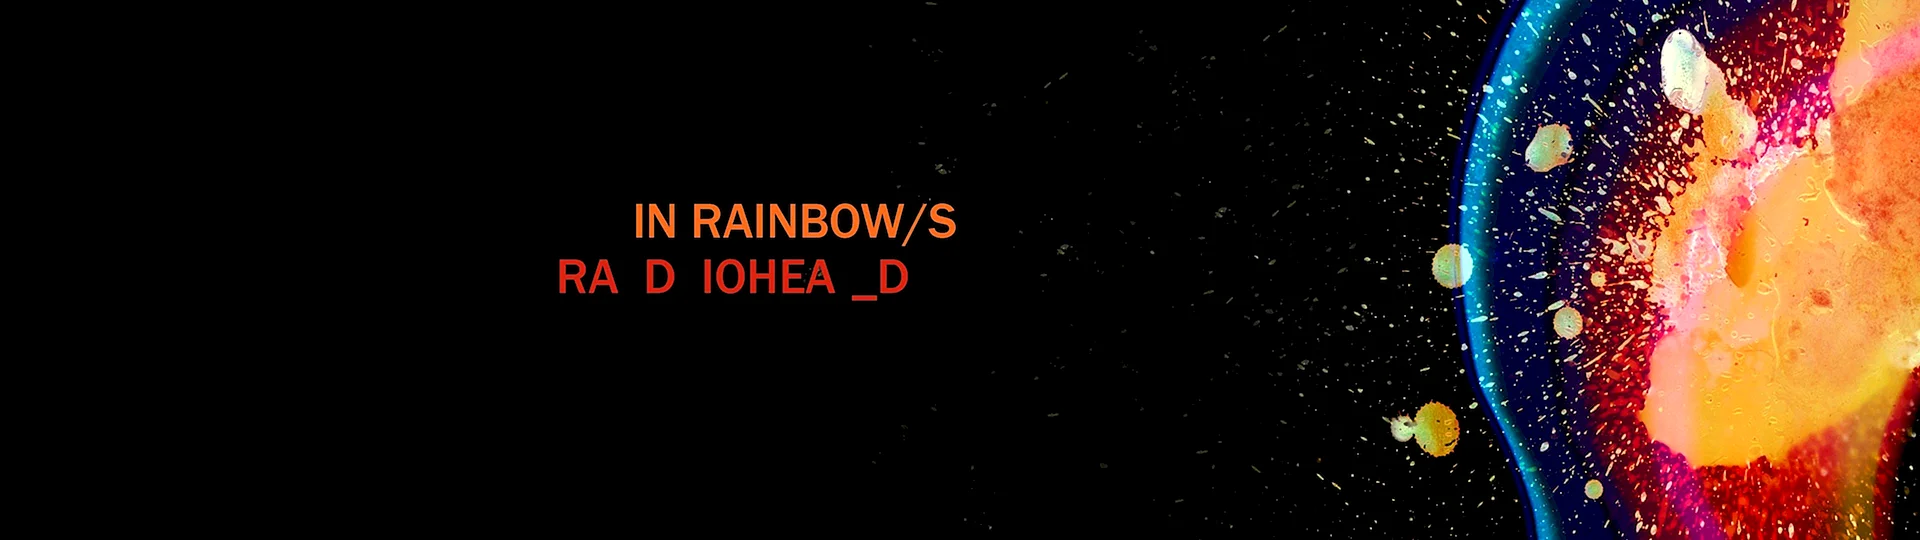 Radiohead In Rainbows Wallpaper